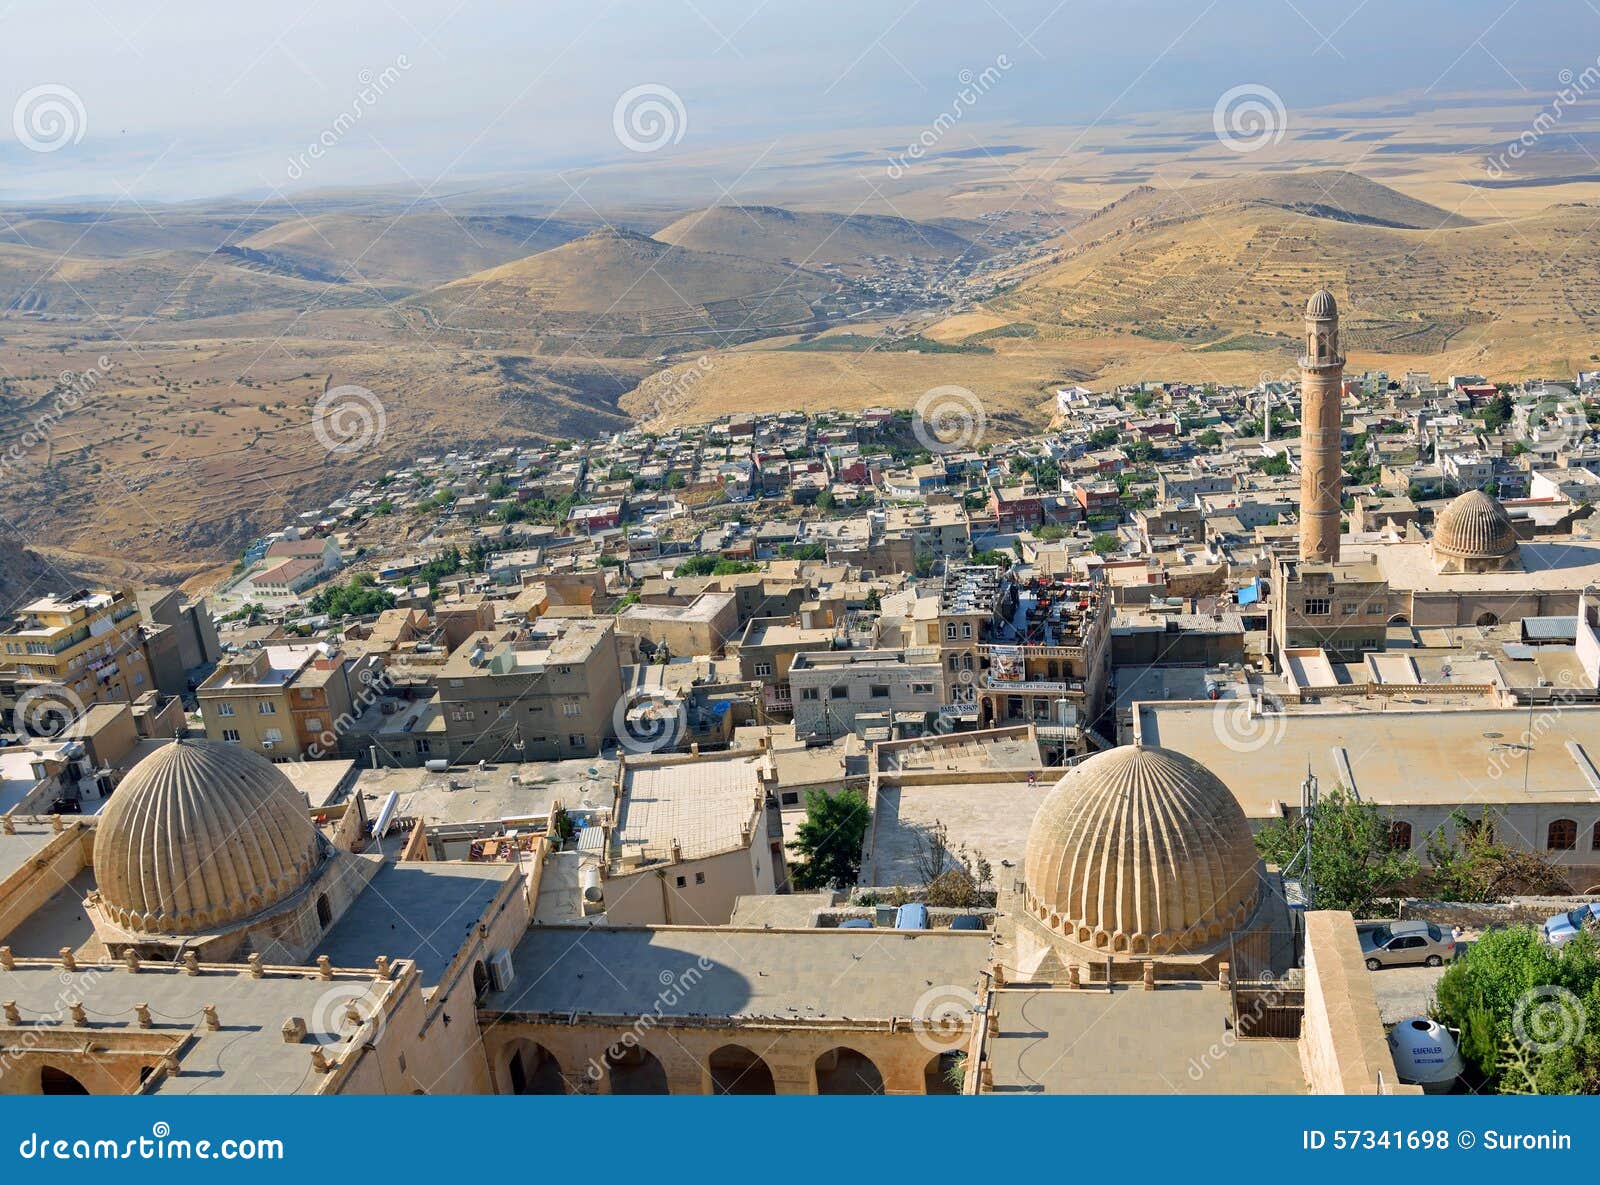 mardin's minarets and domes